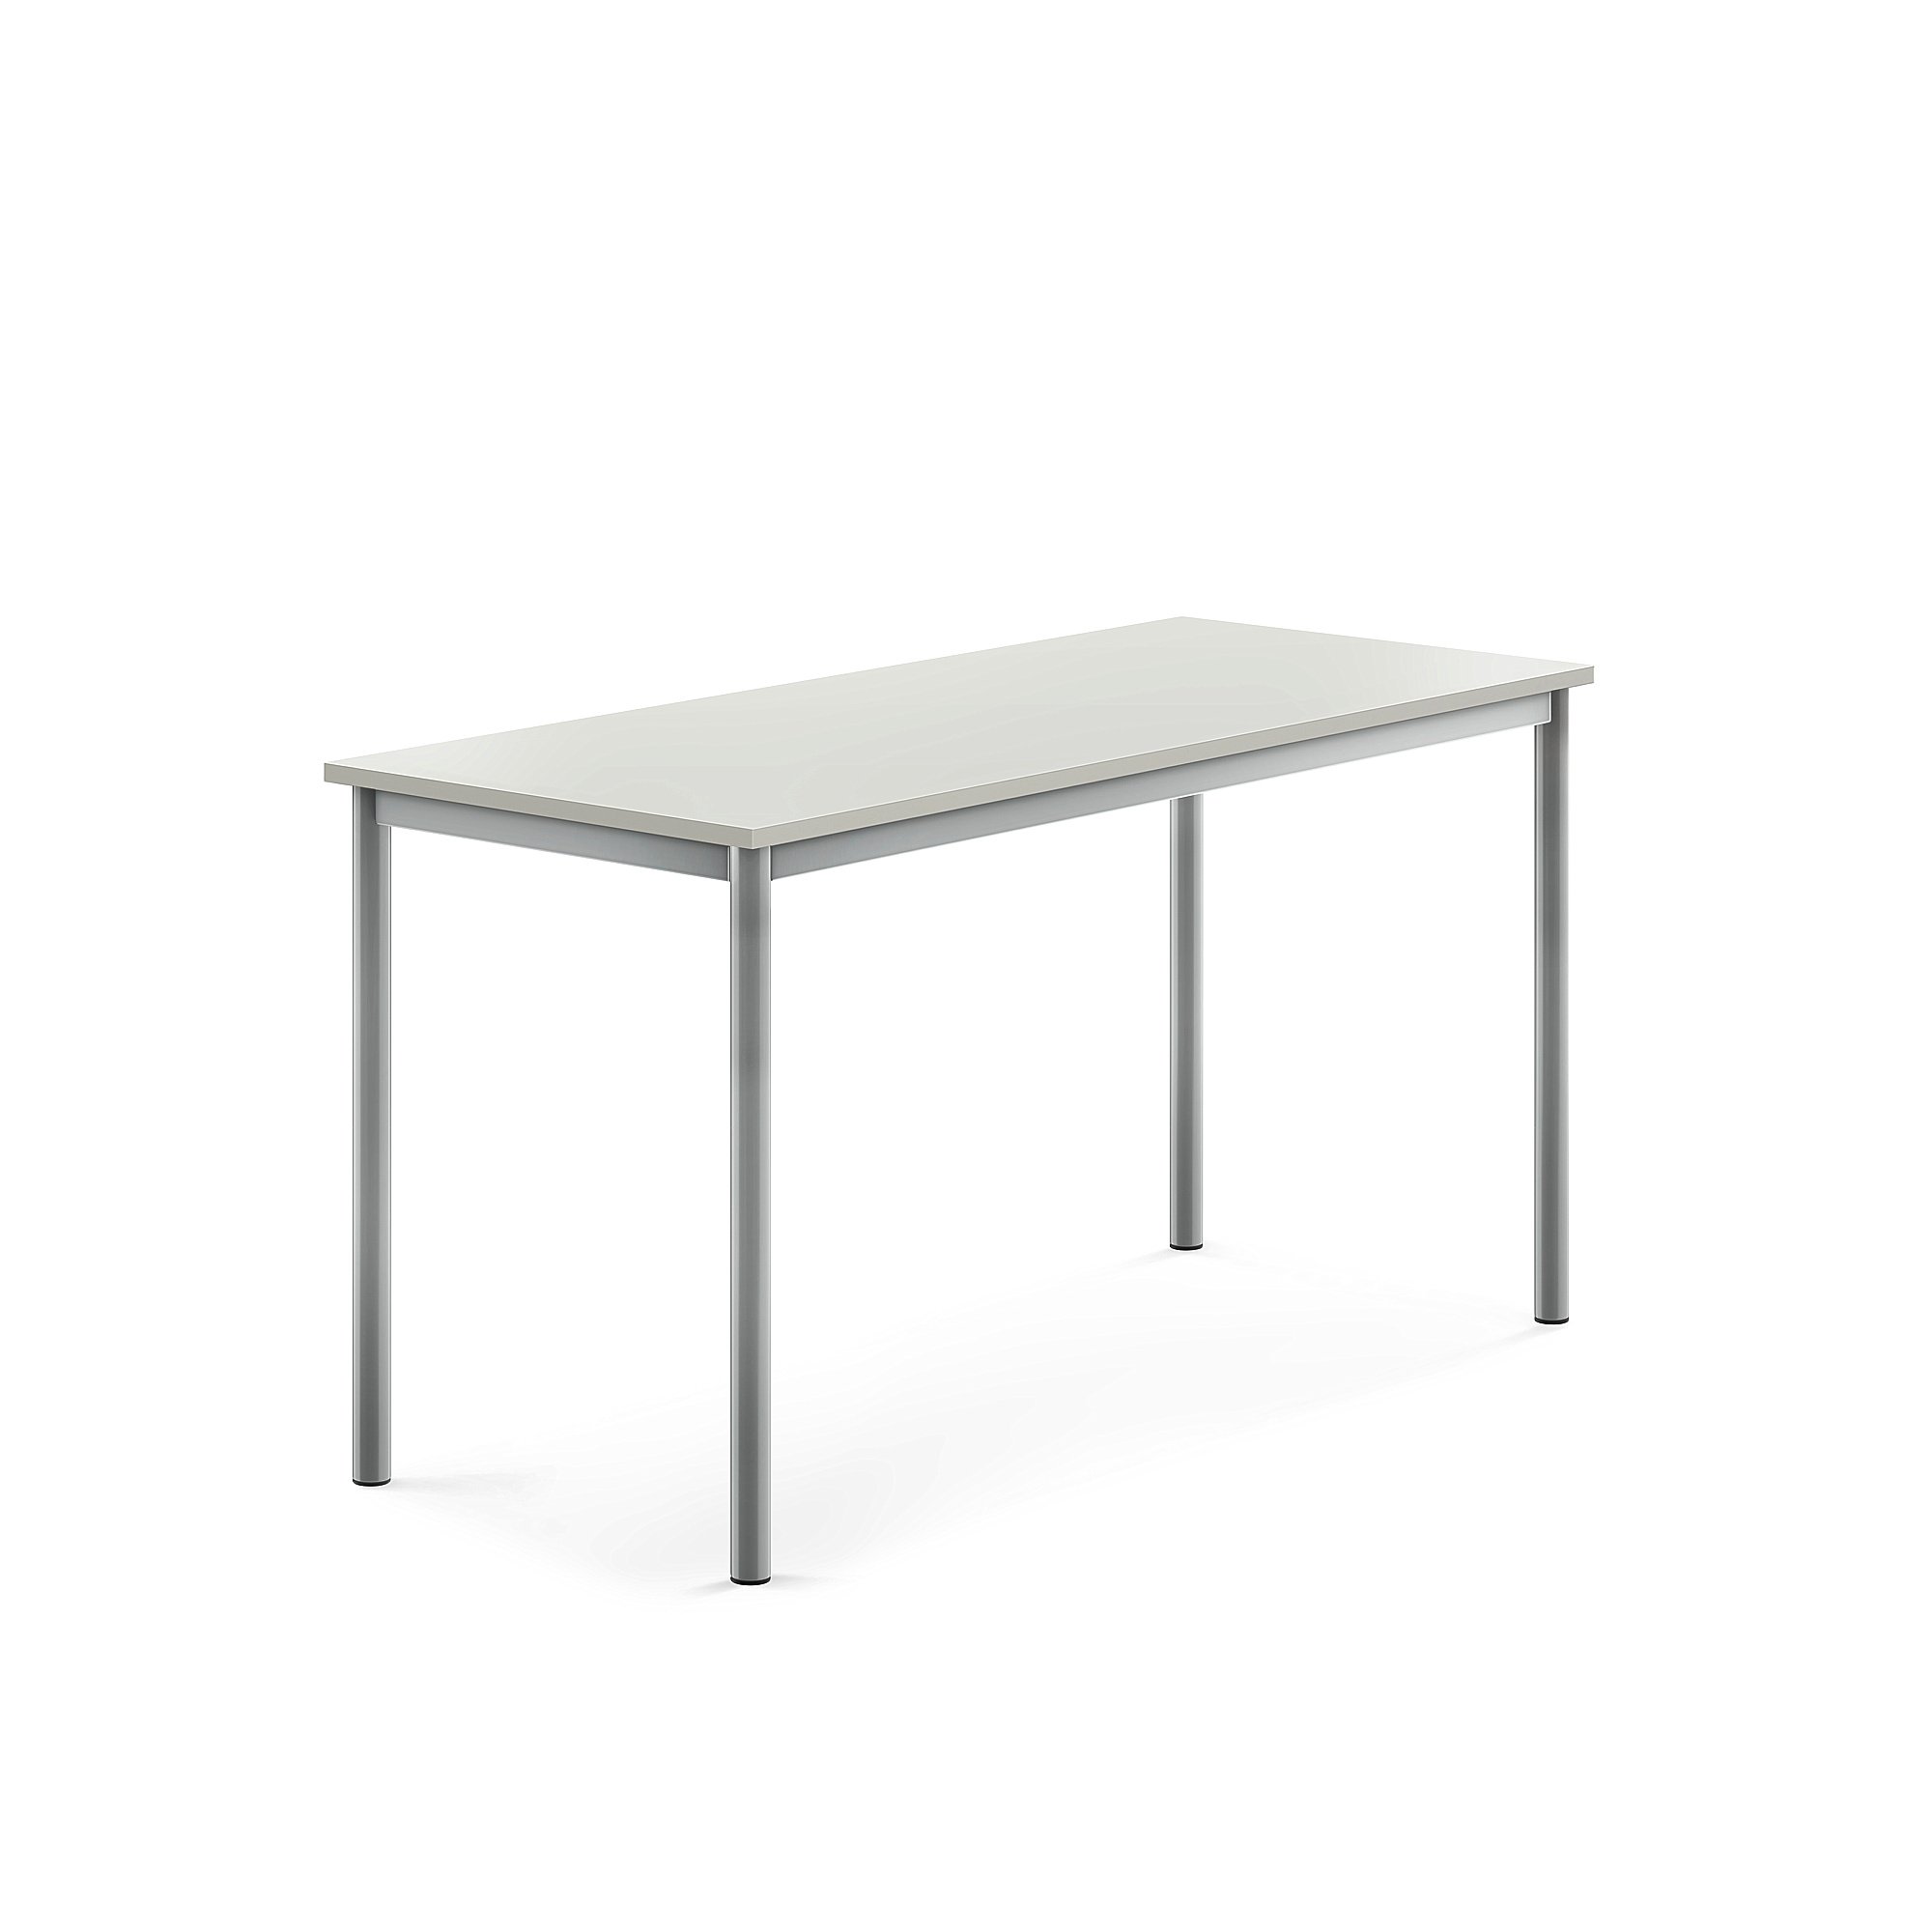 Stůl SONITUS, 1400x600x720 mm, stříbrné nohy, HPL deska tlumící hluk, šedá